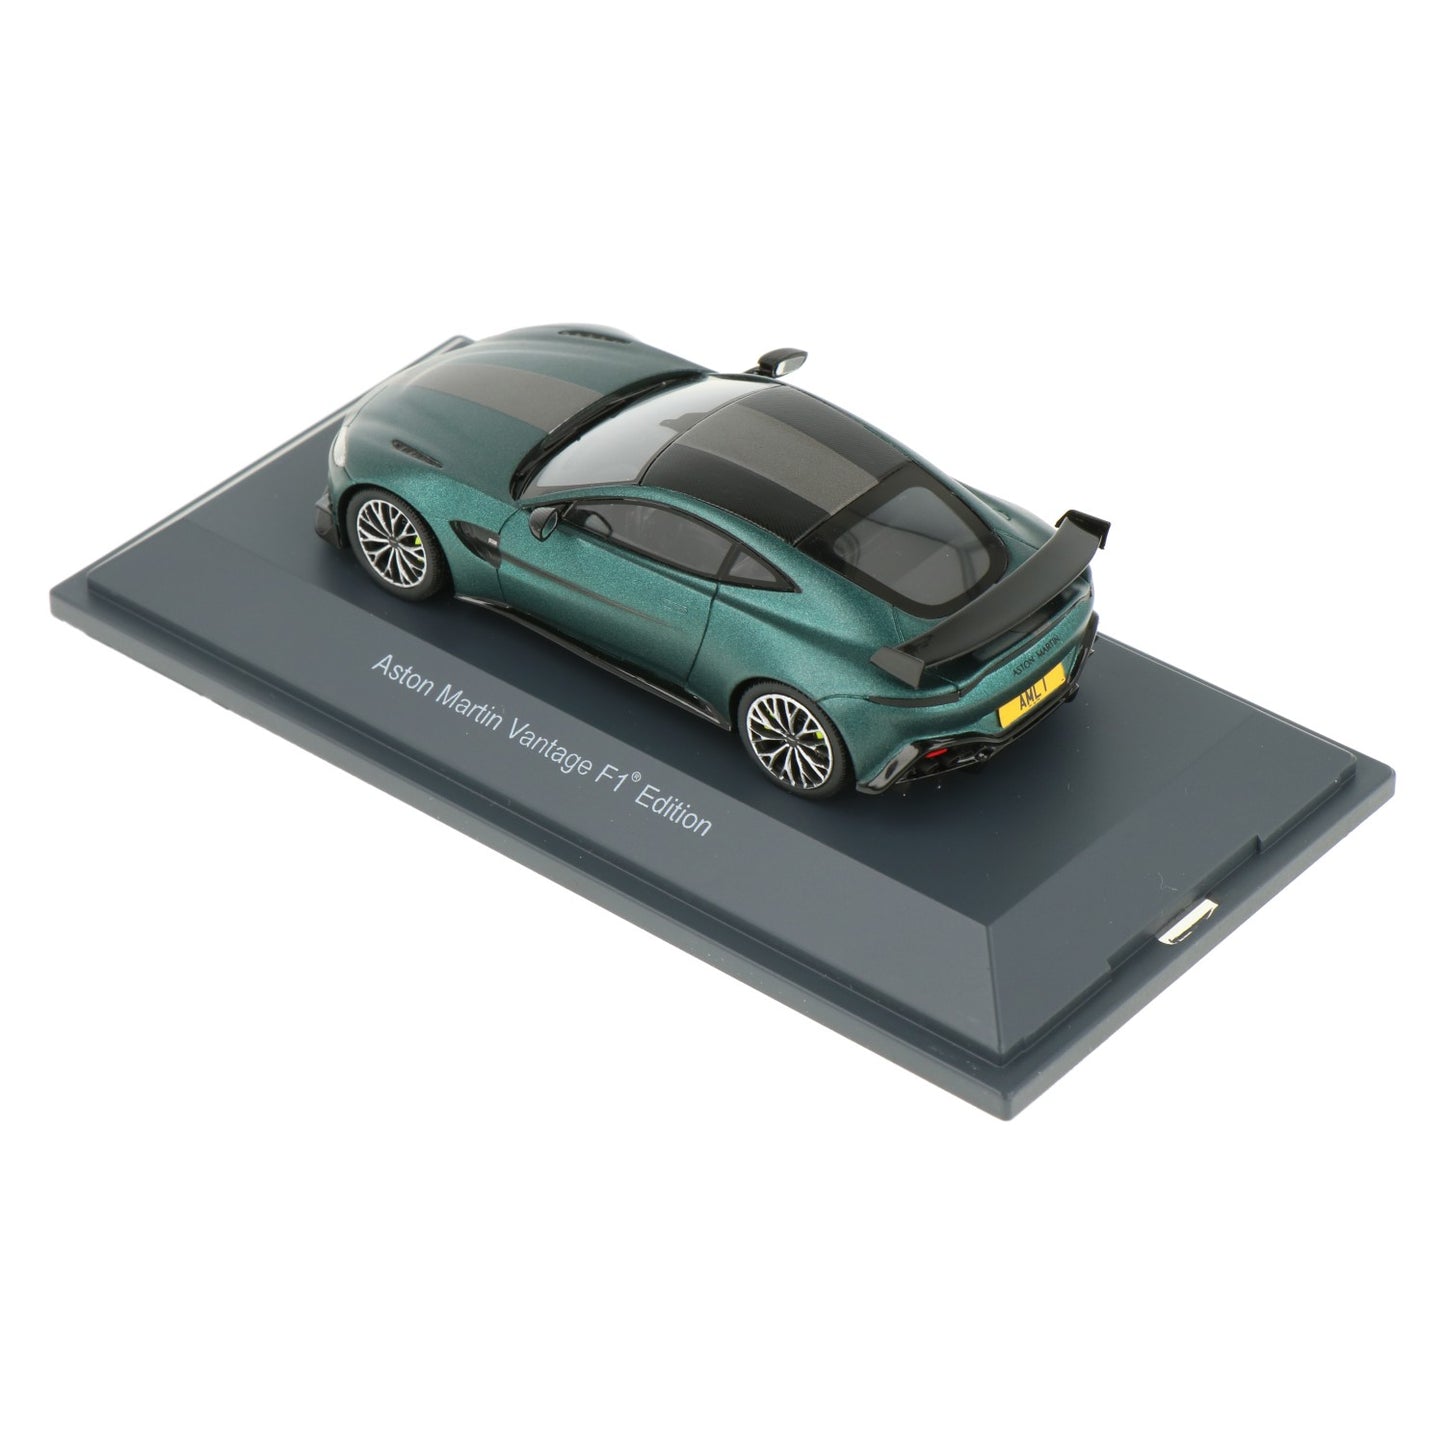 Schuco 1:43 Aston Martin Vantage F1 Edition Green 450925700